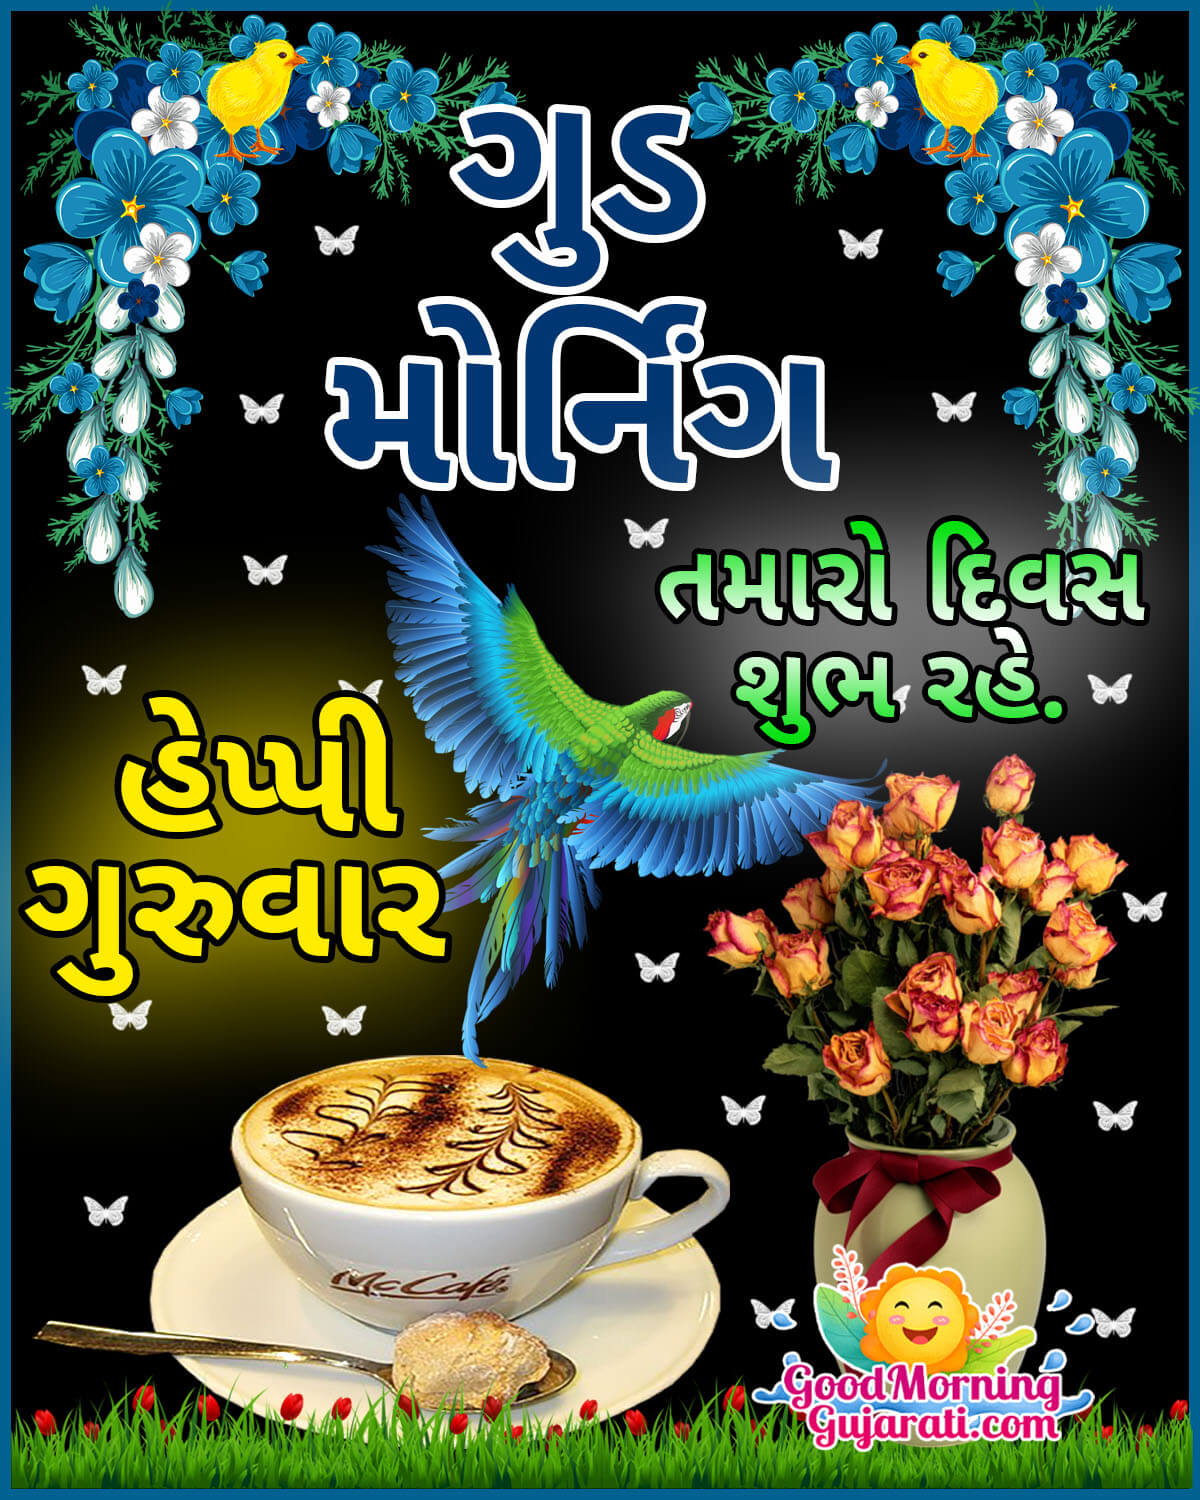 Good Morning Happy Thursday In Gujarati